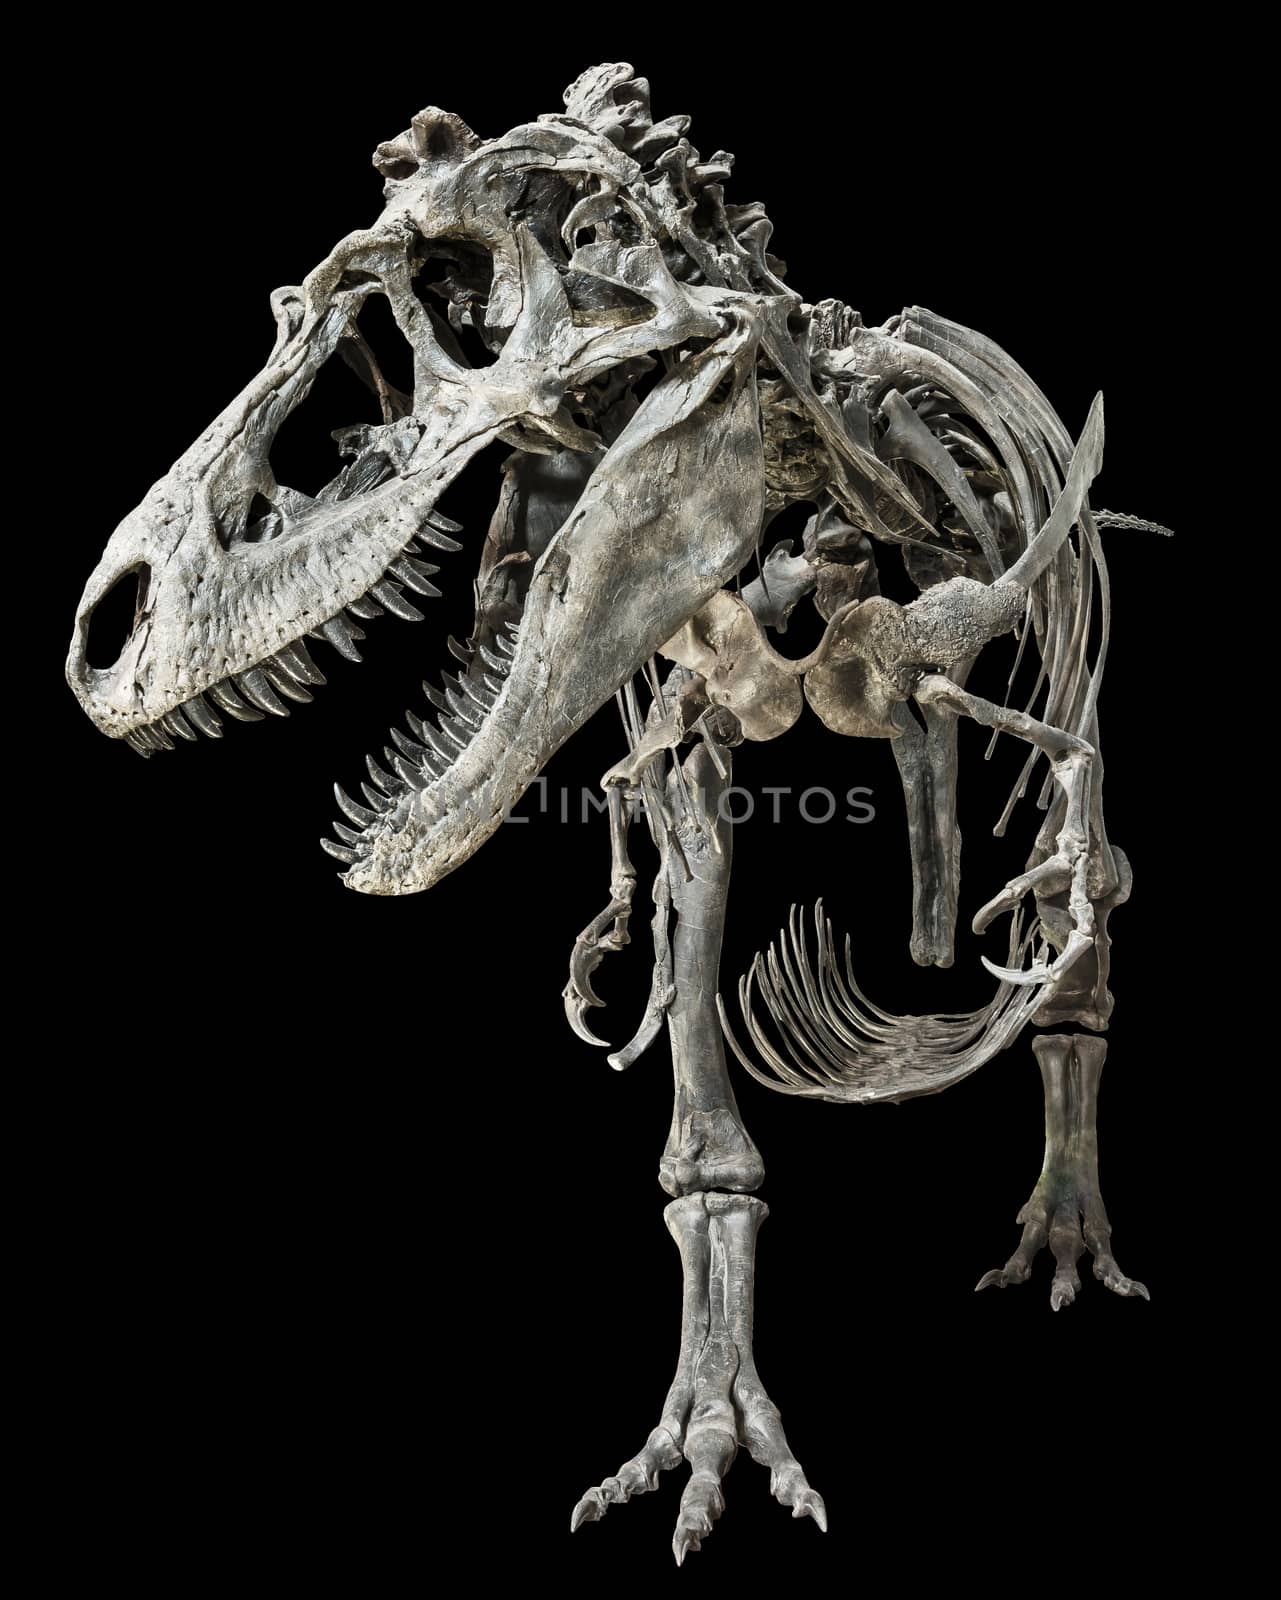 Tyrannosaurus Rex skeleton on isolated background by stockdevil